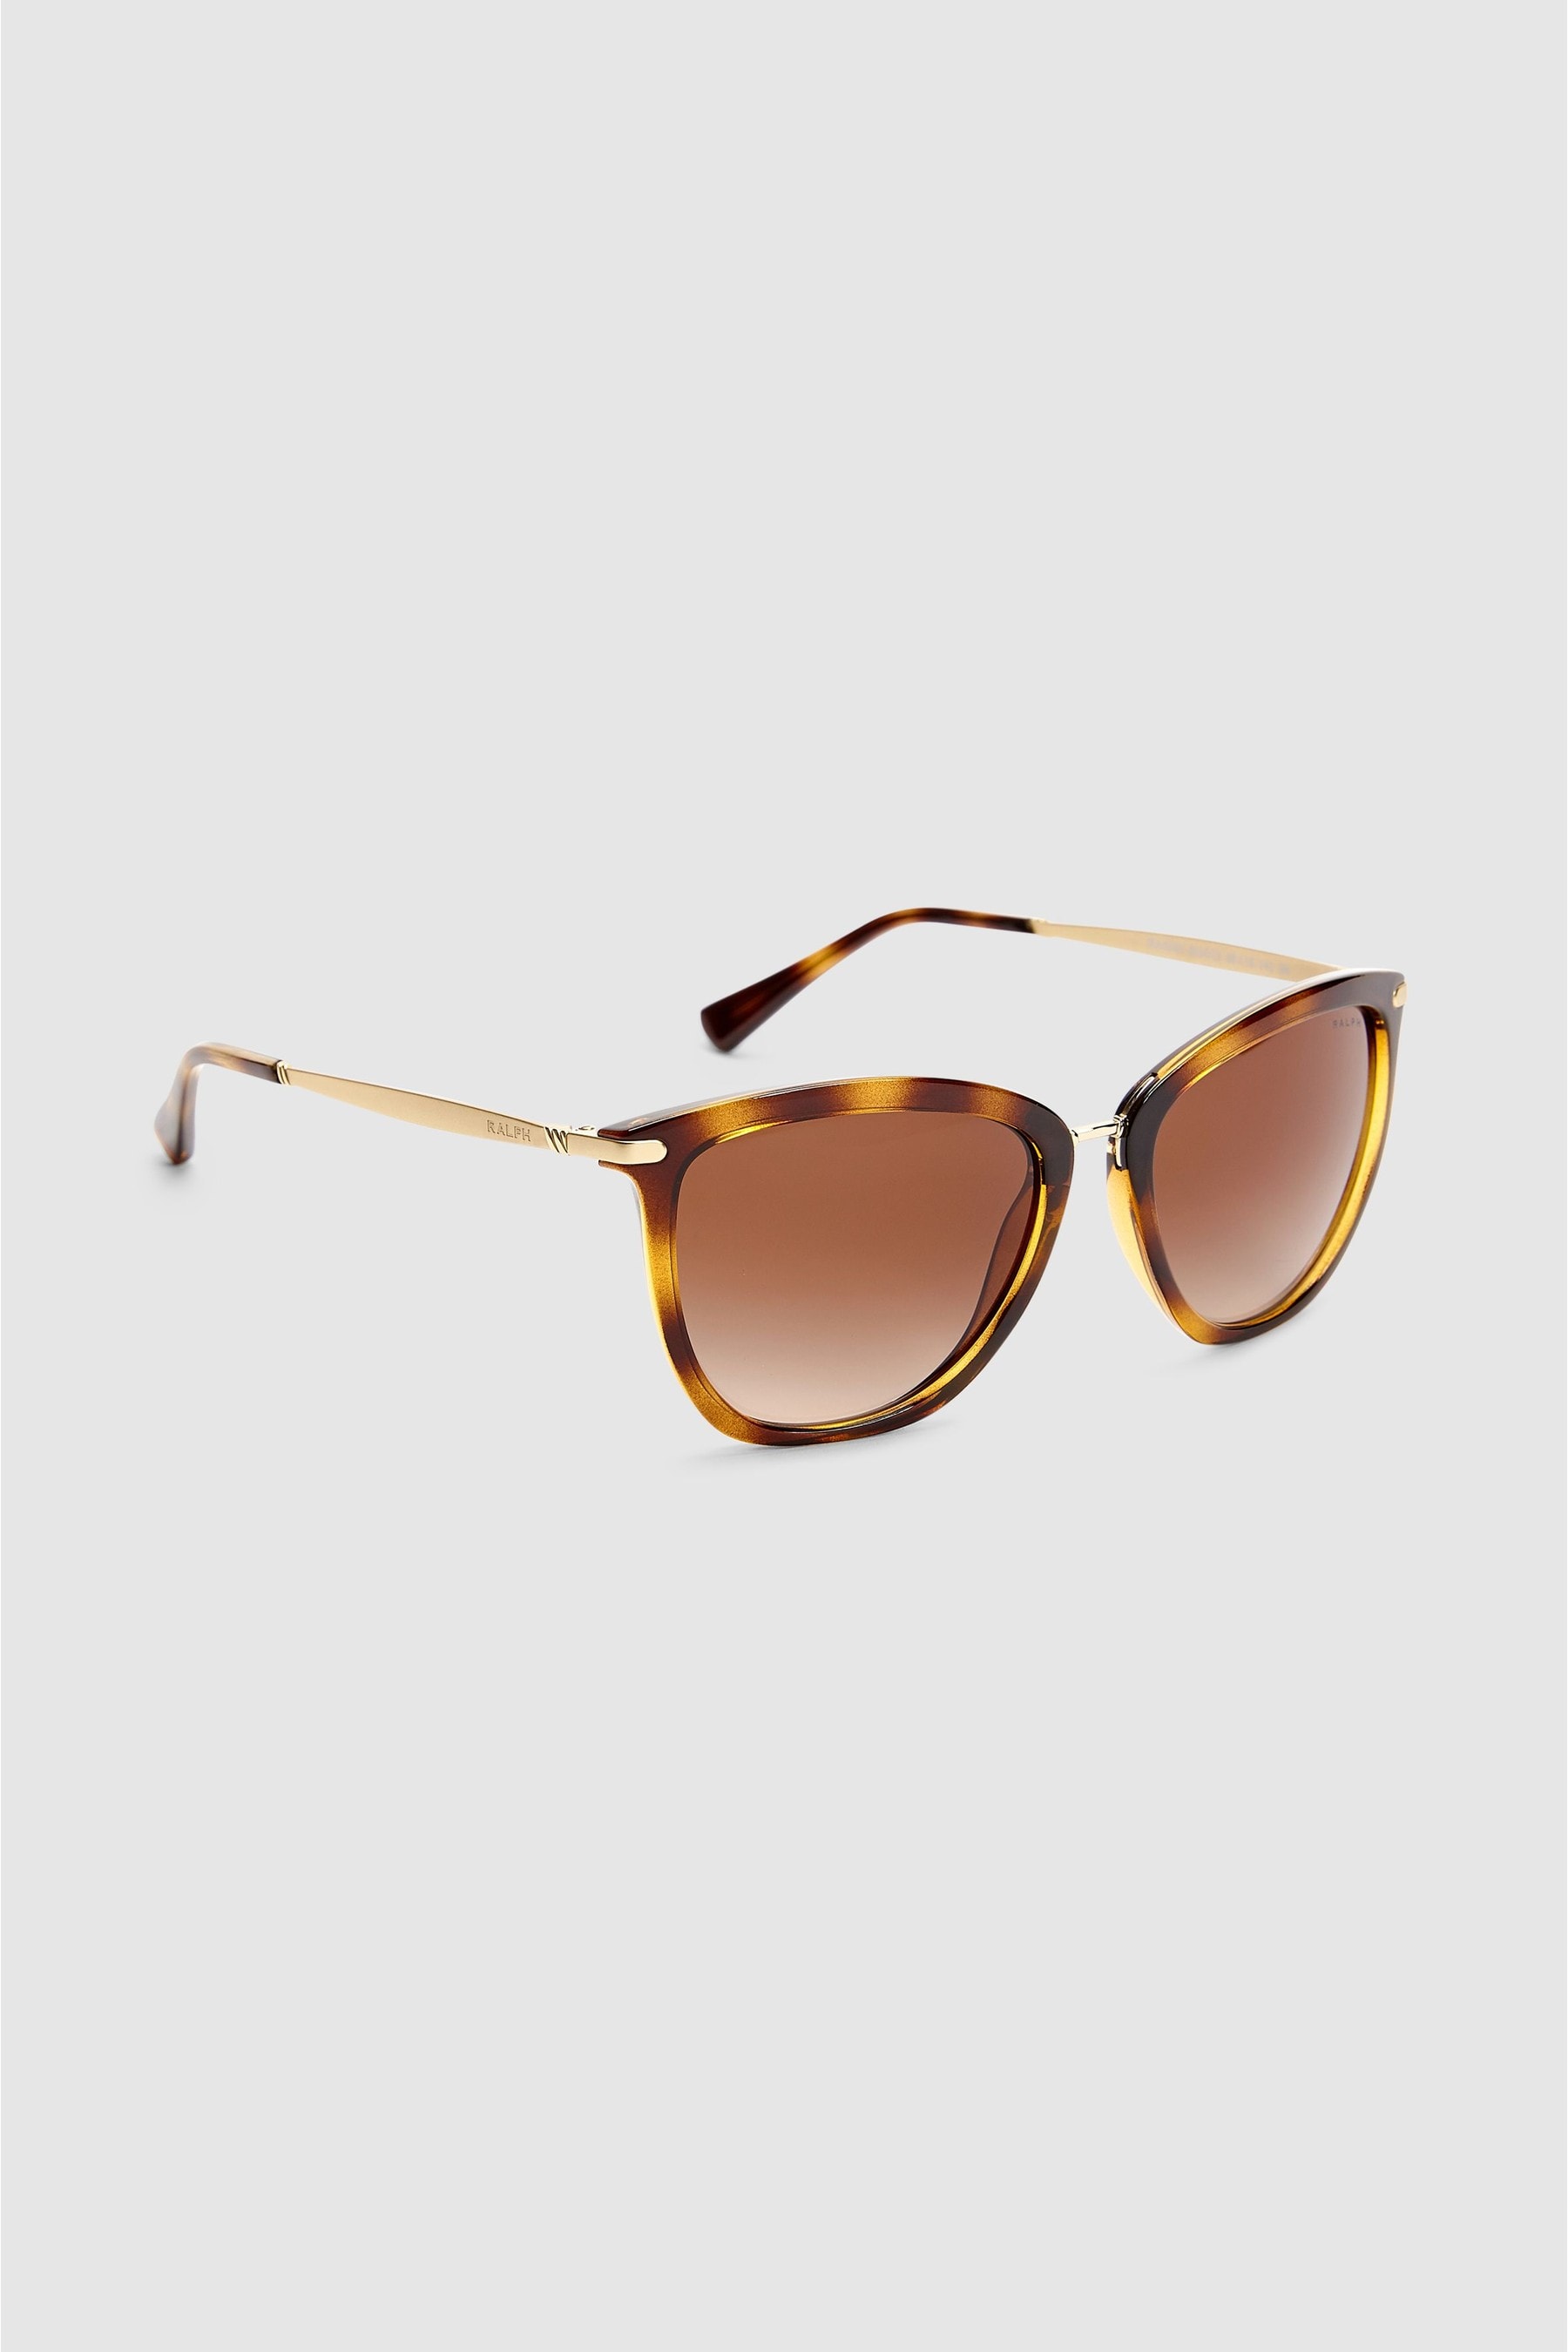 Buy Ralph by Ralph Lauren Tortoiseshell Effect Gold Arm Sunglasses from ...